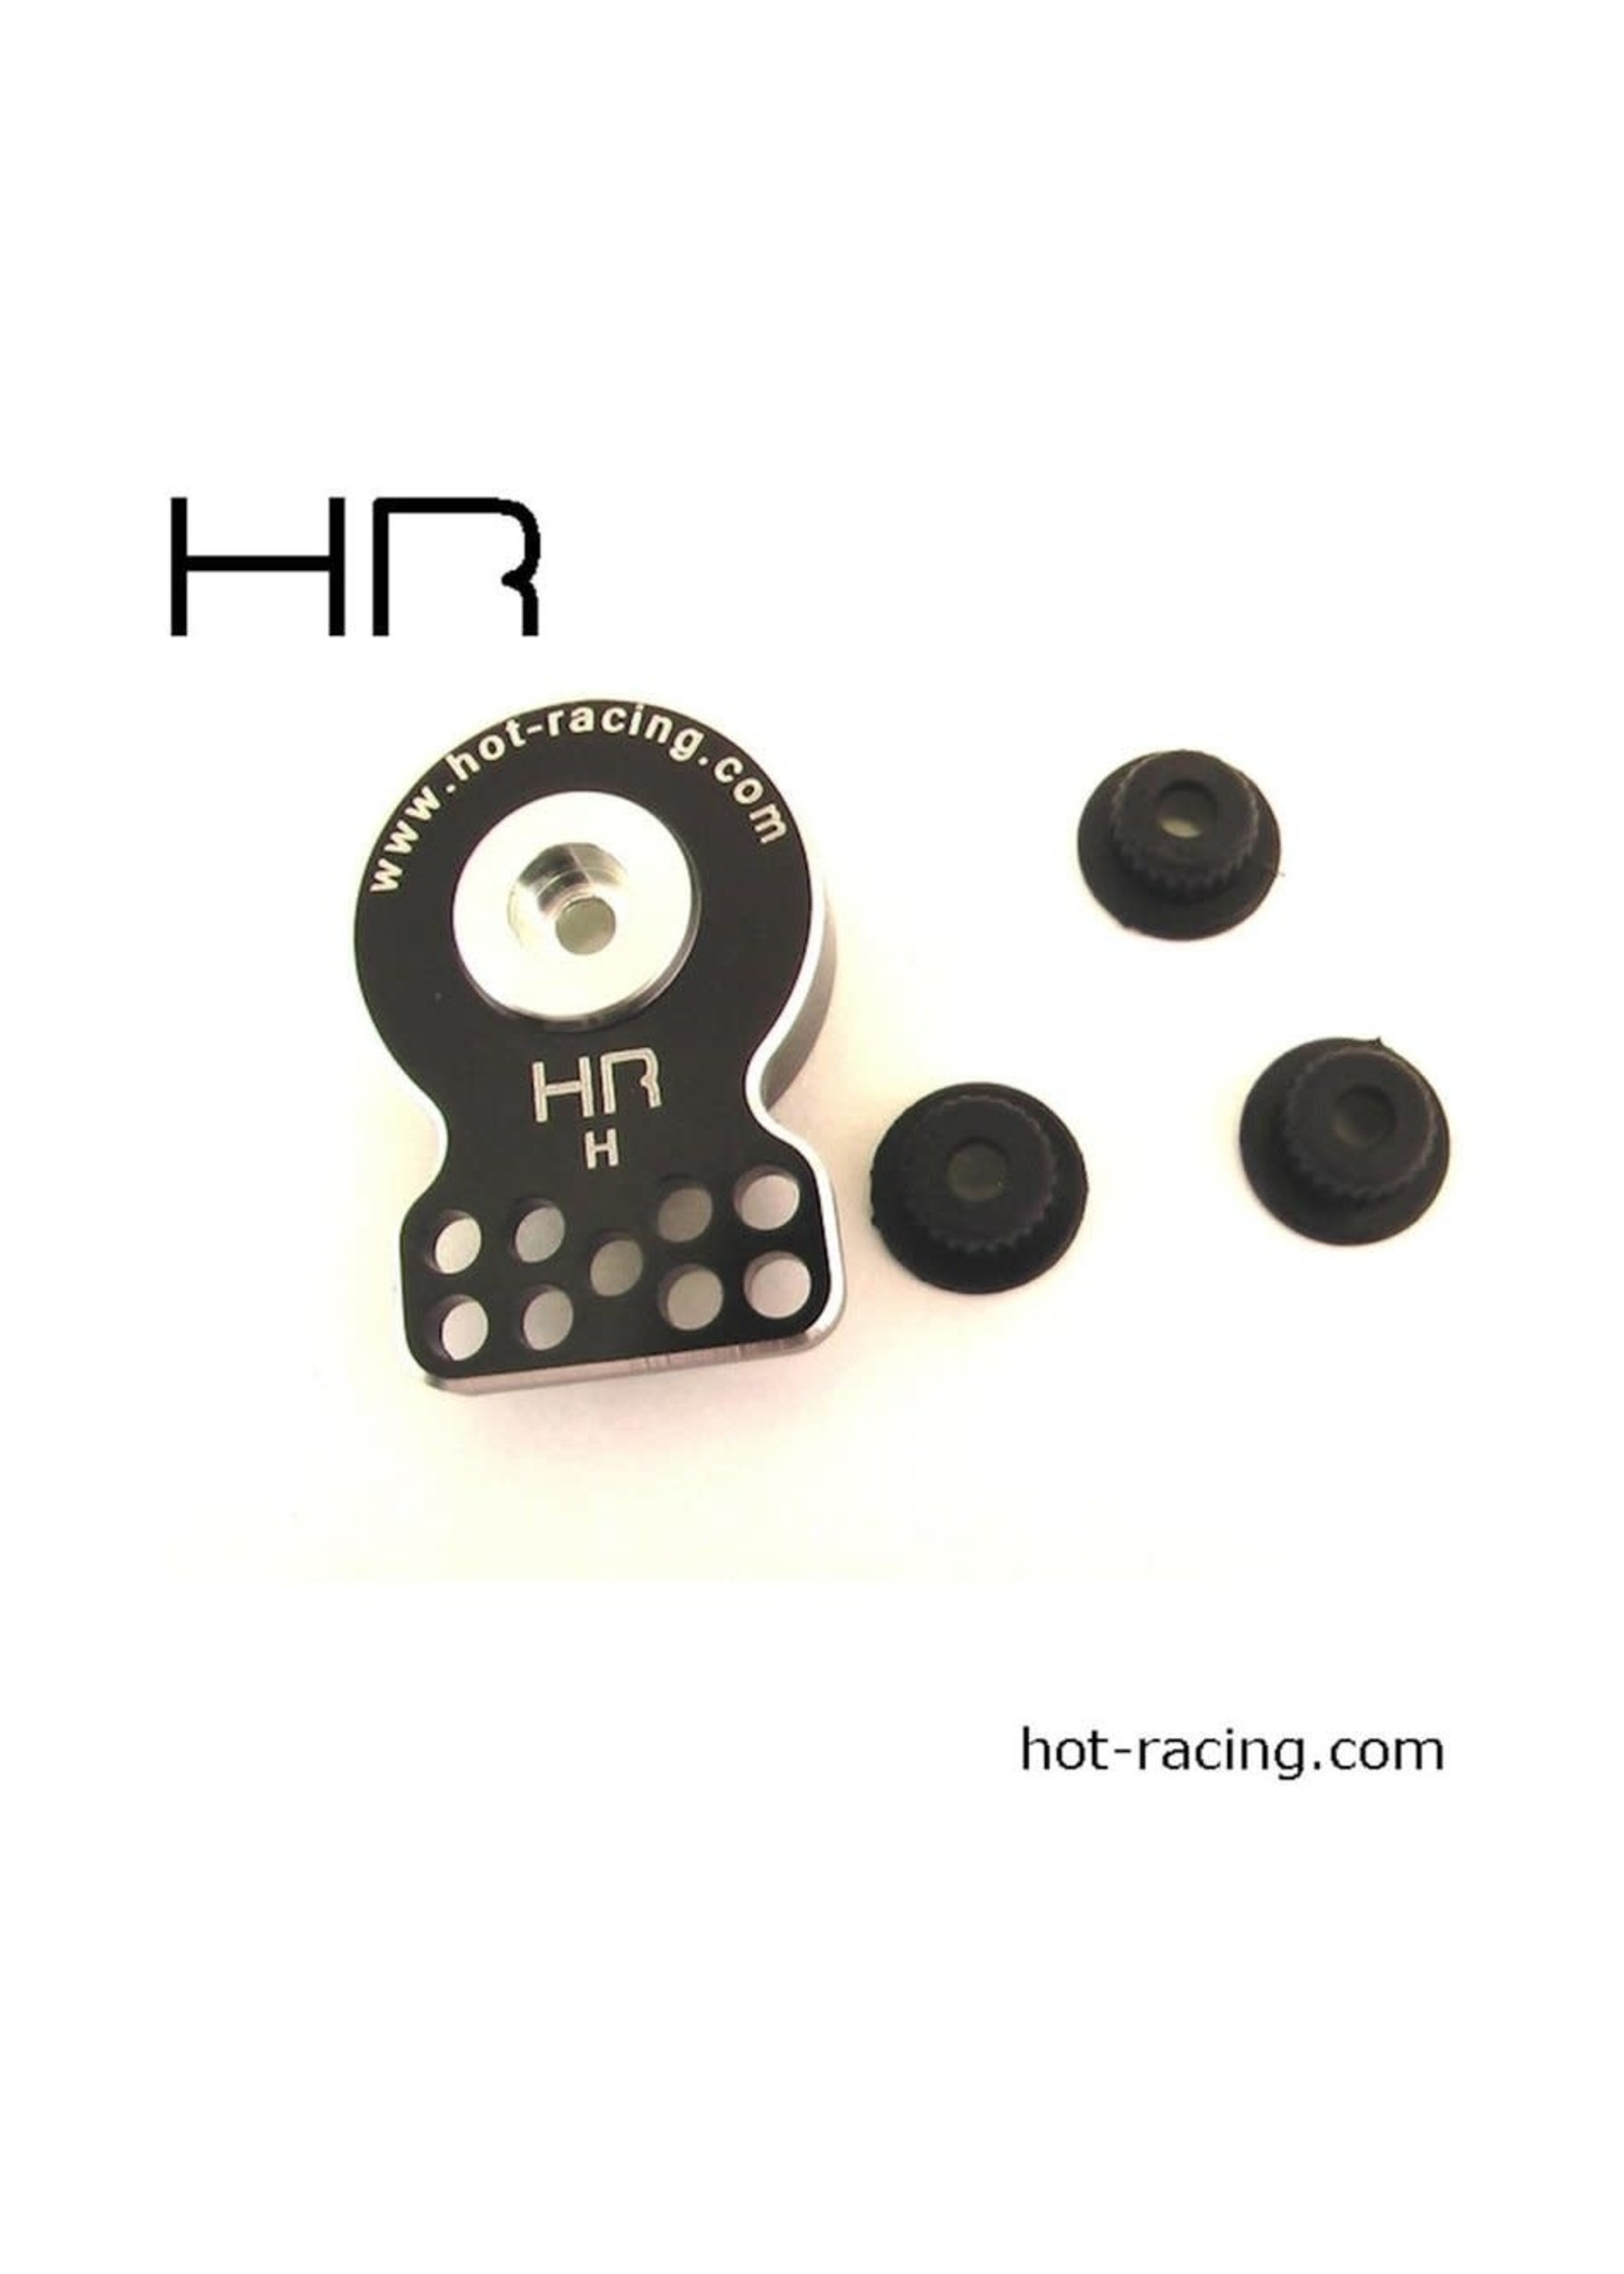 Hot Racing HRASHS88H Hot Racing Aluminum CNC Heavy Duty Servo Saver w/Heavy Spring Tension (Black)